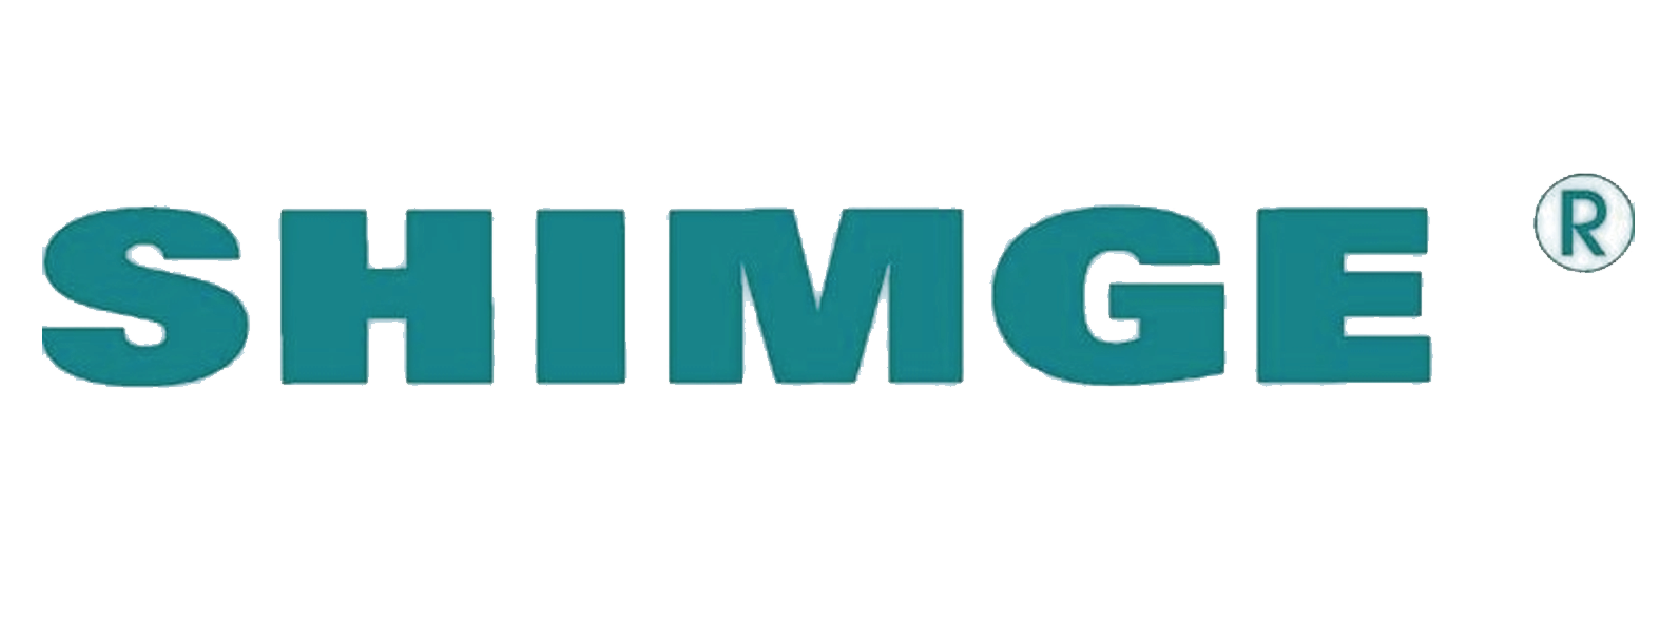 Logo imagenes-16